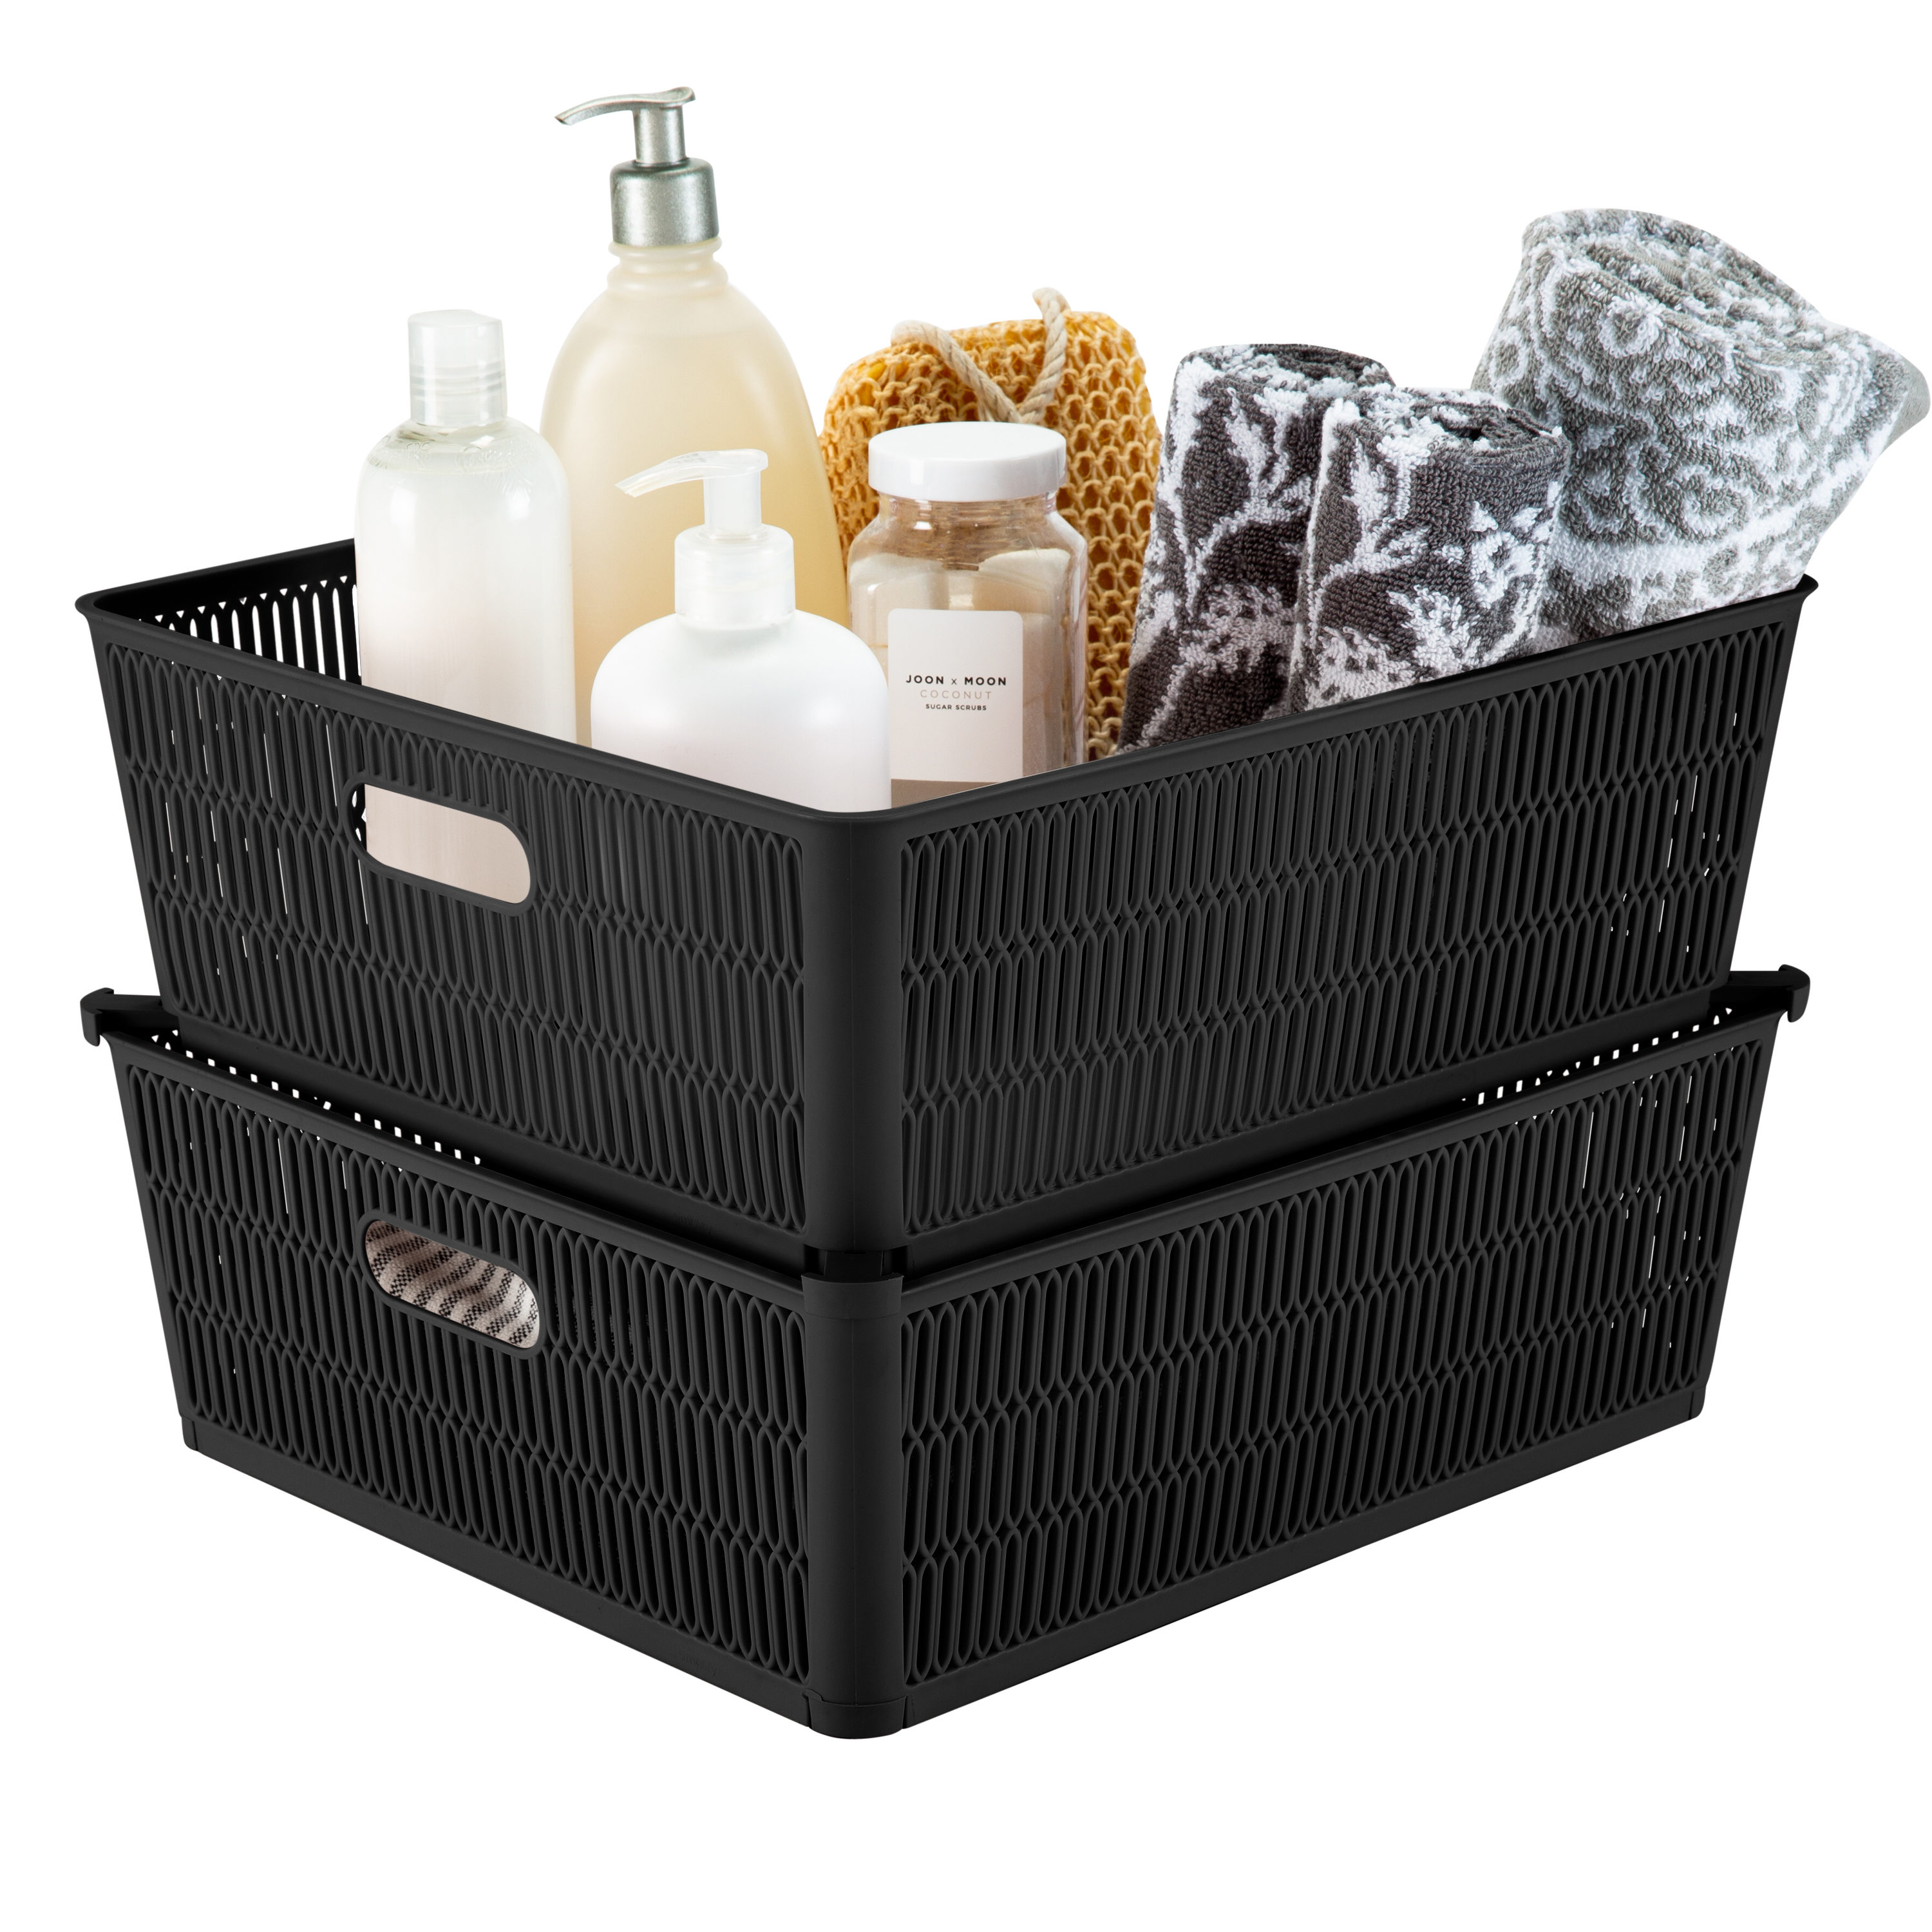 Simplify 10 Pack Plastic Organizing Storage Basket Set, Grey 